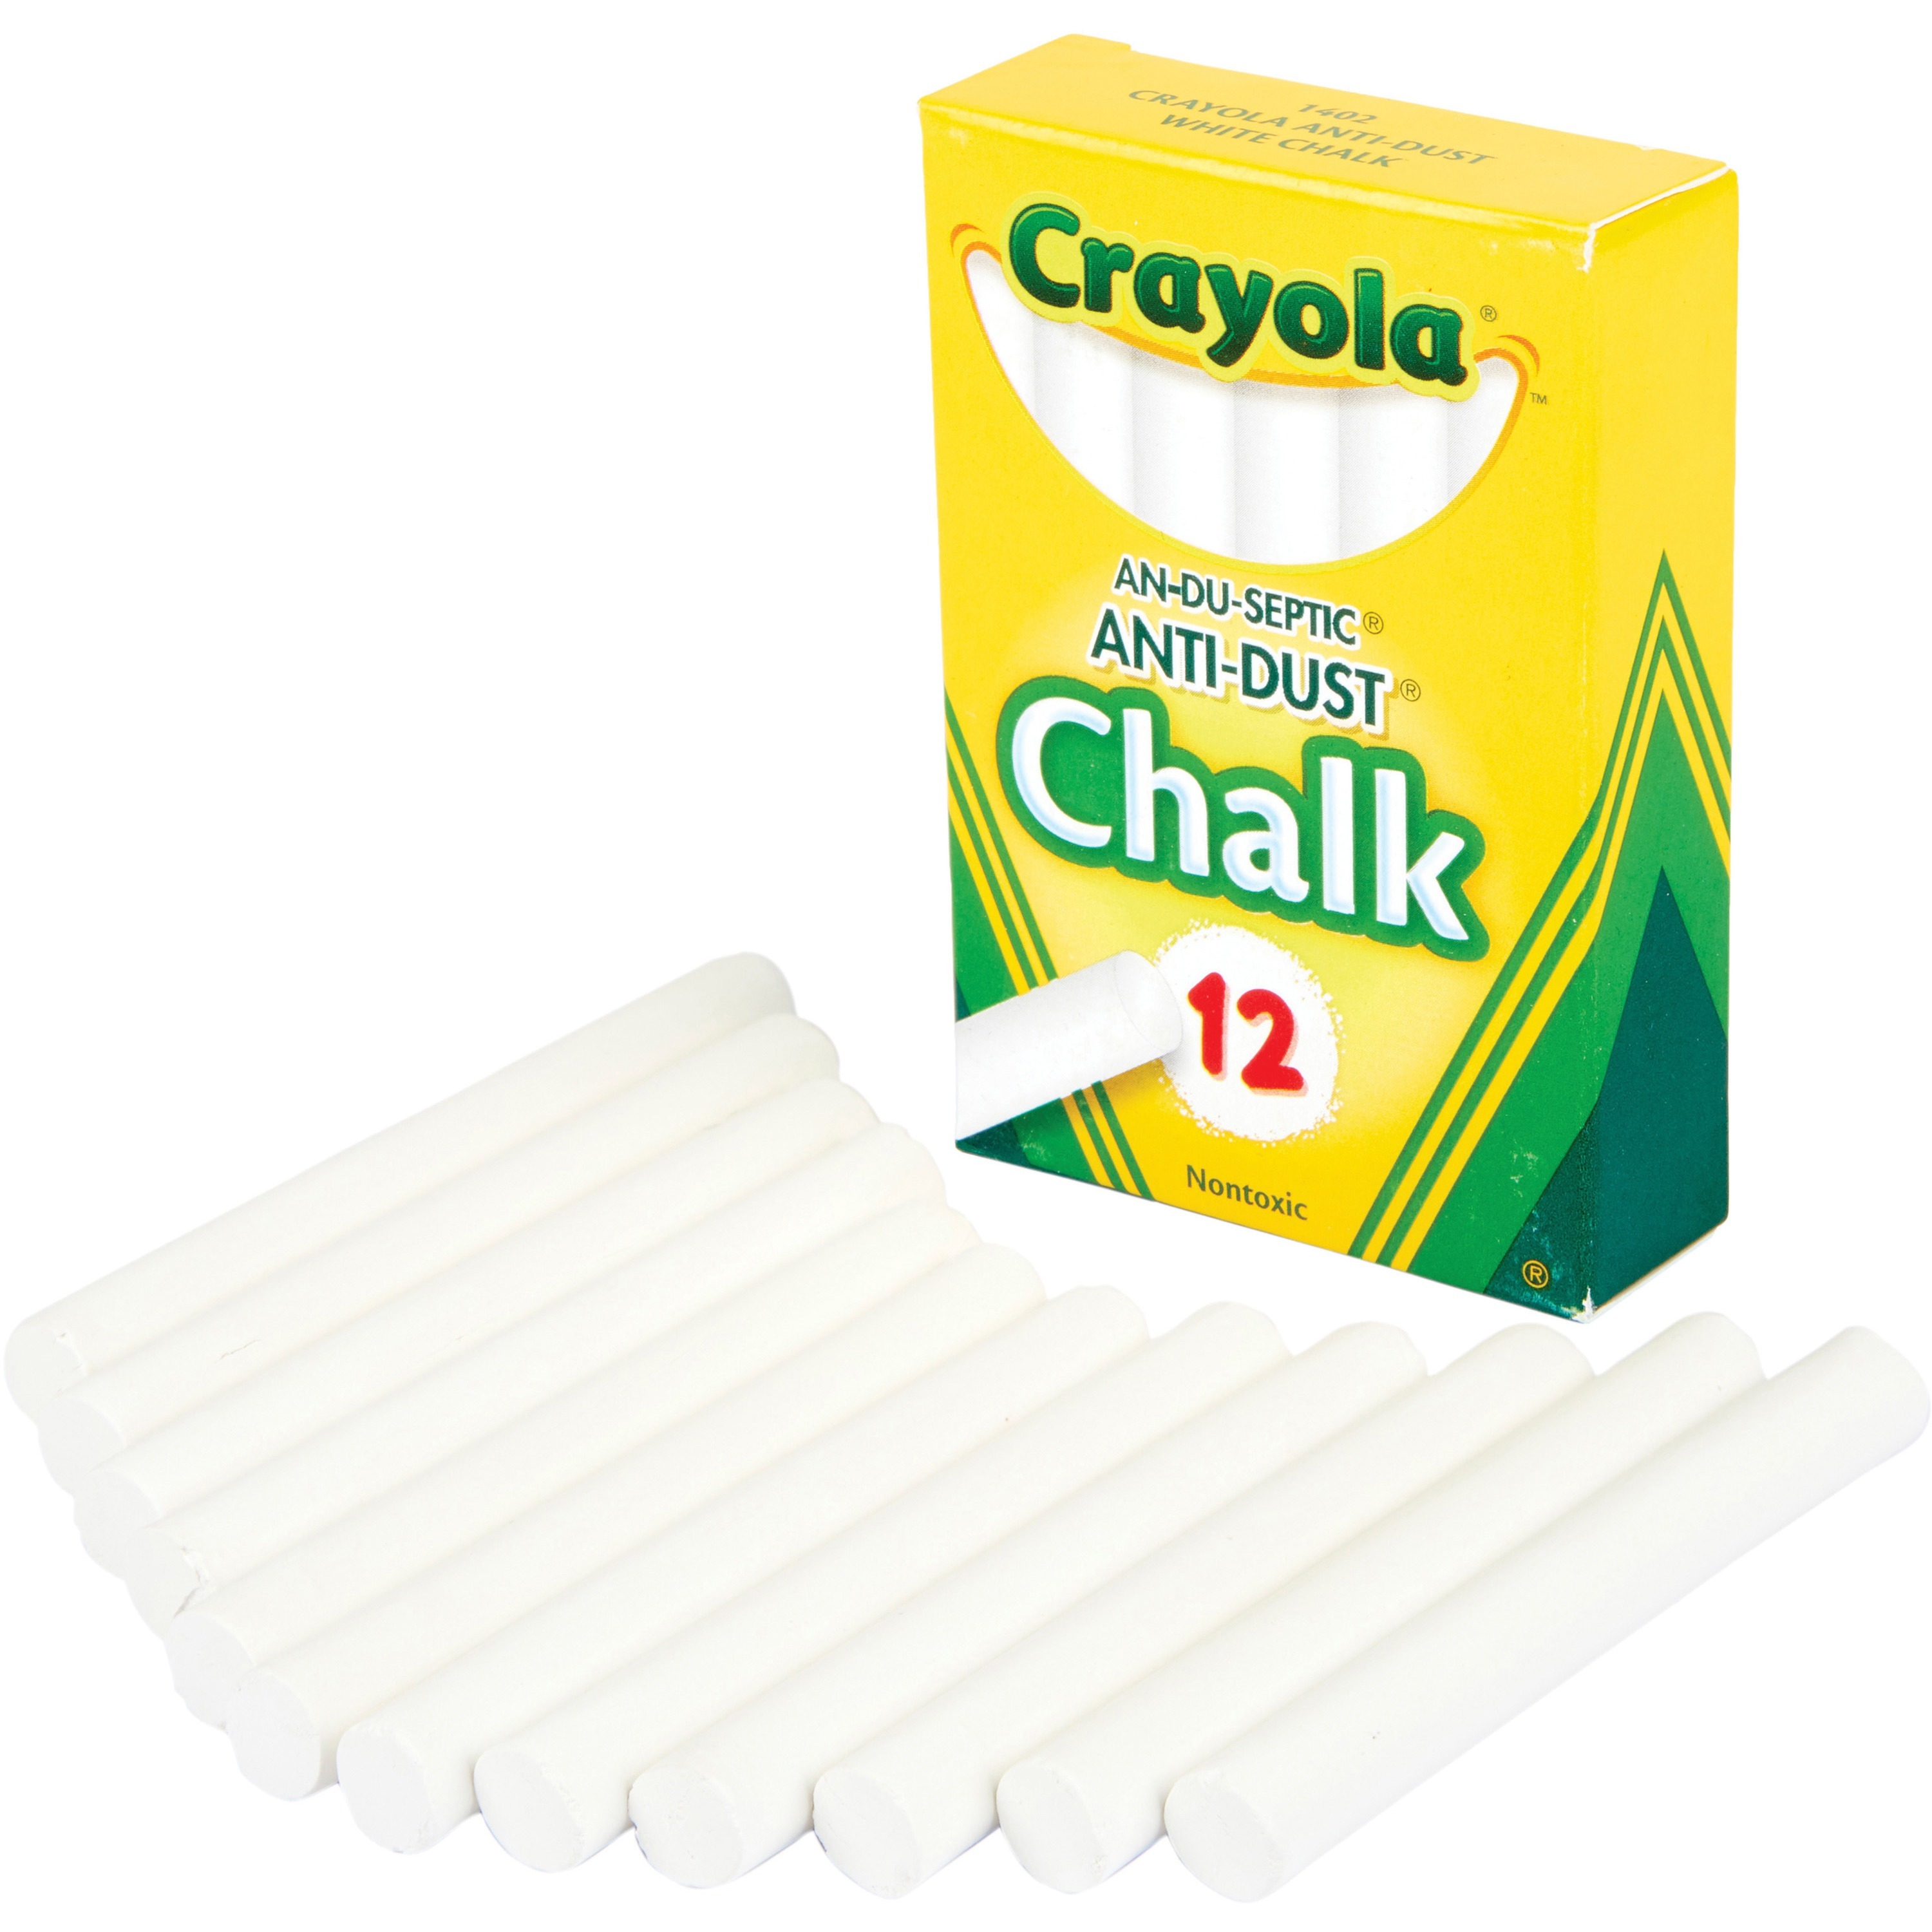 CLI Heavy-duty Chalk Holder